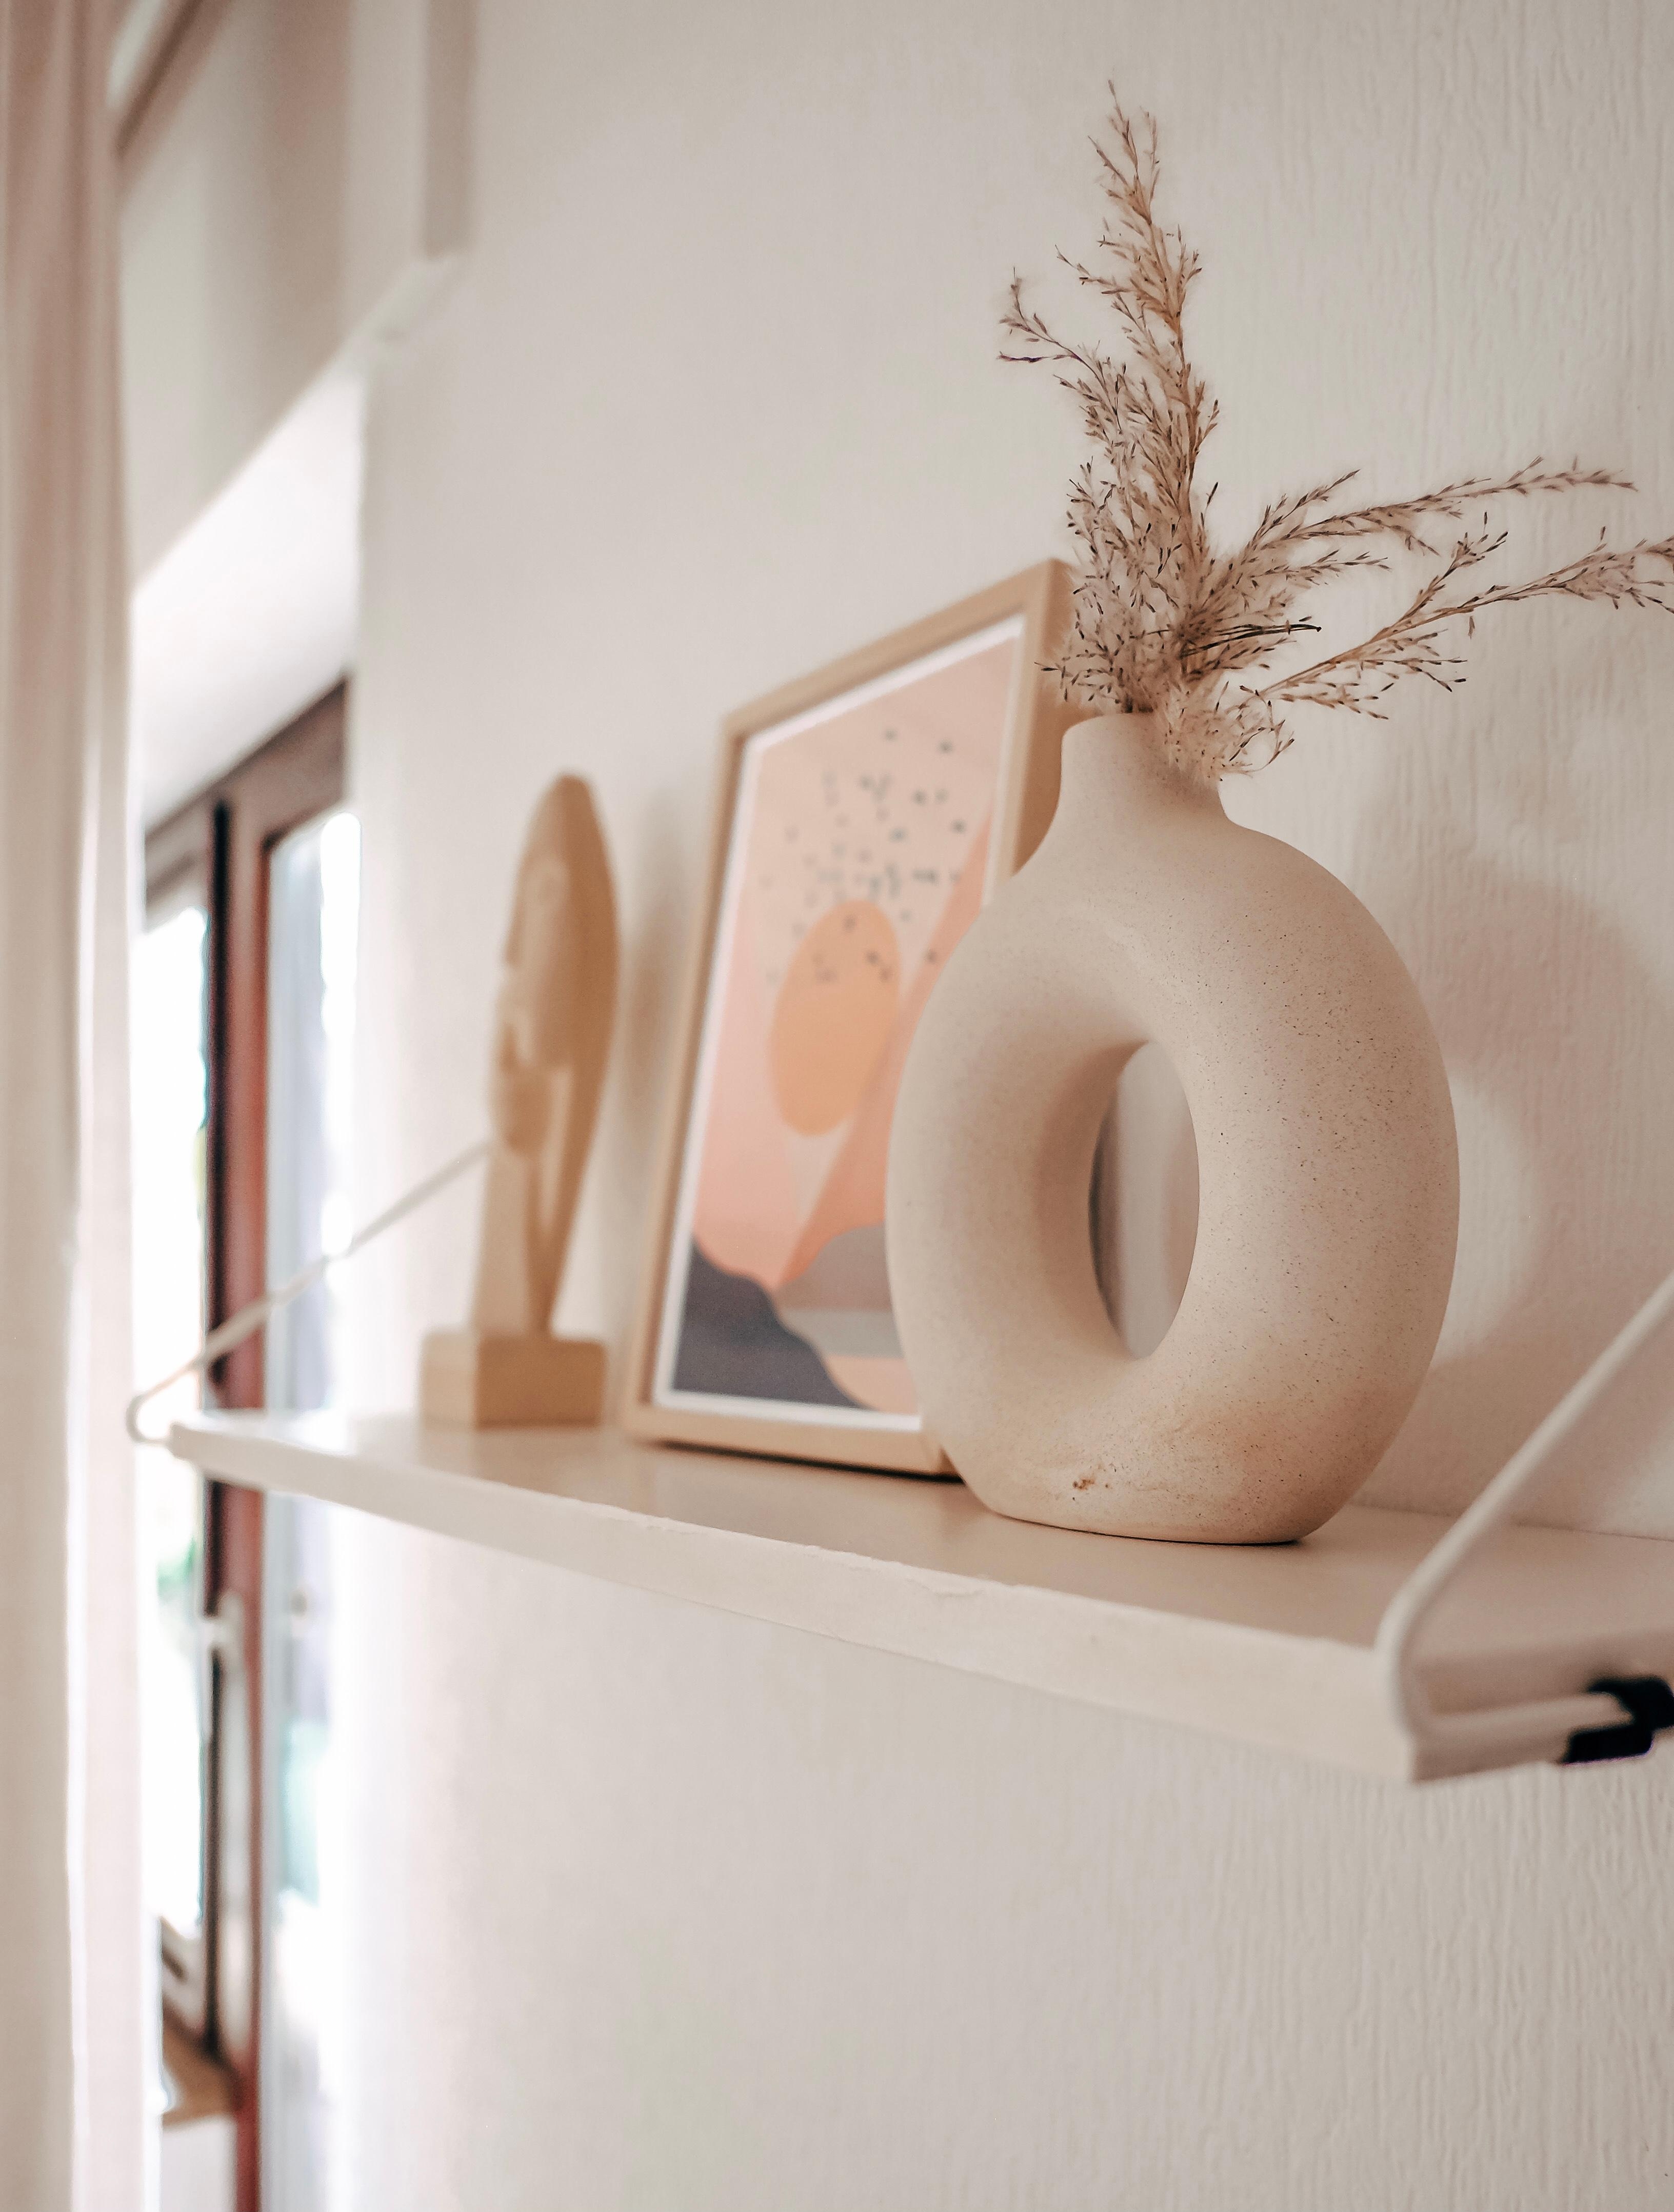 Stringliebe! #interiorlove #interior #stringshelf #shelfdecor #decoration #livingroom #livingroominspo